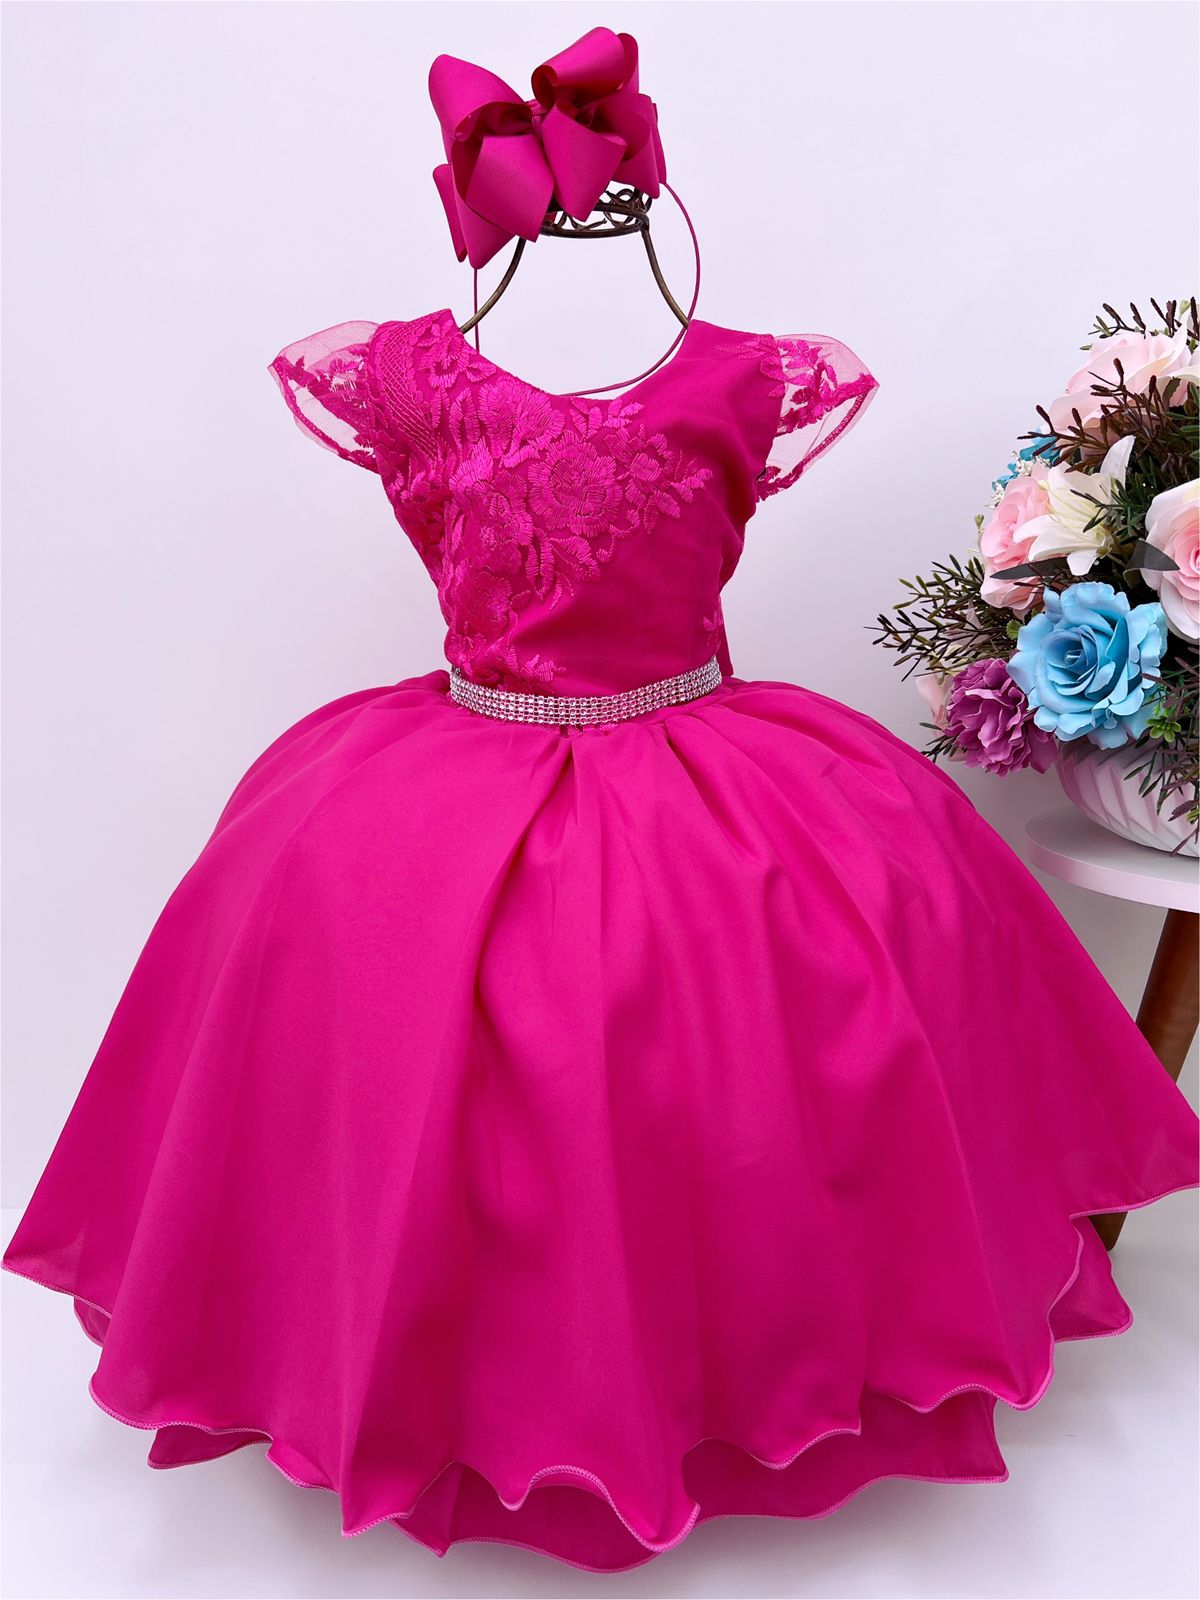 Vestido Infantil Pink Renda Cinto Strass Luxo